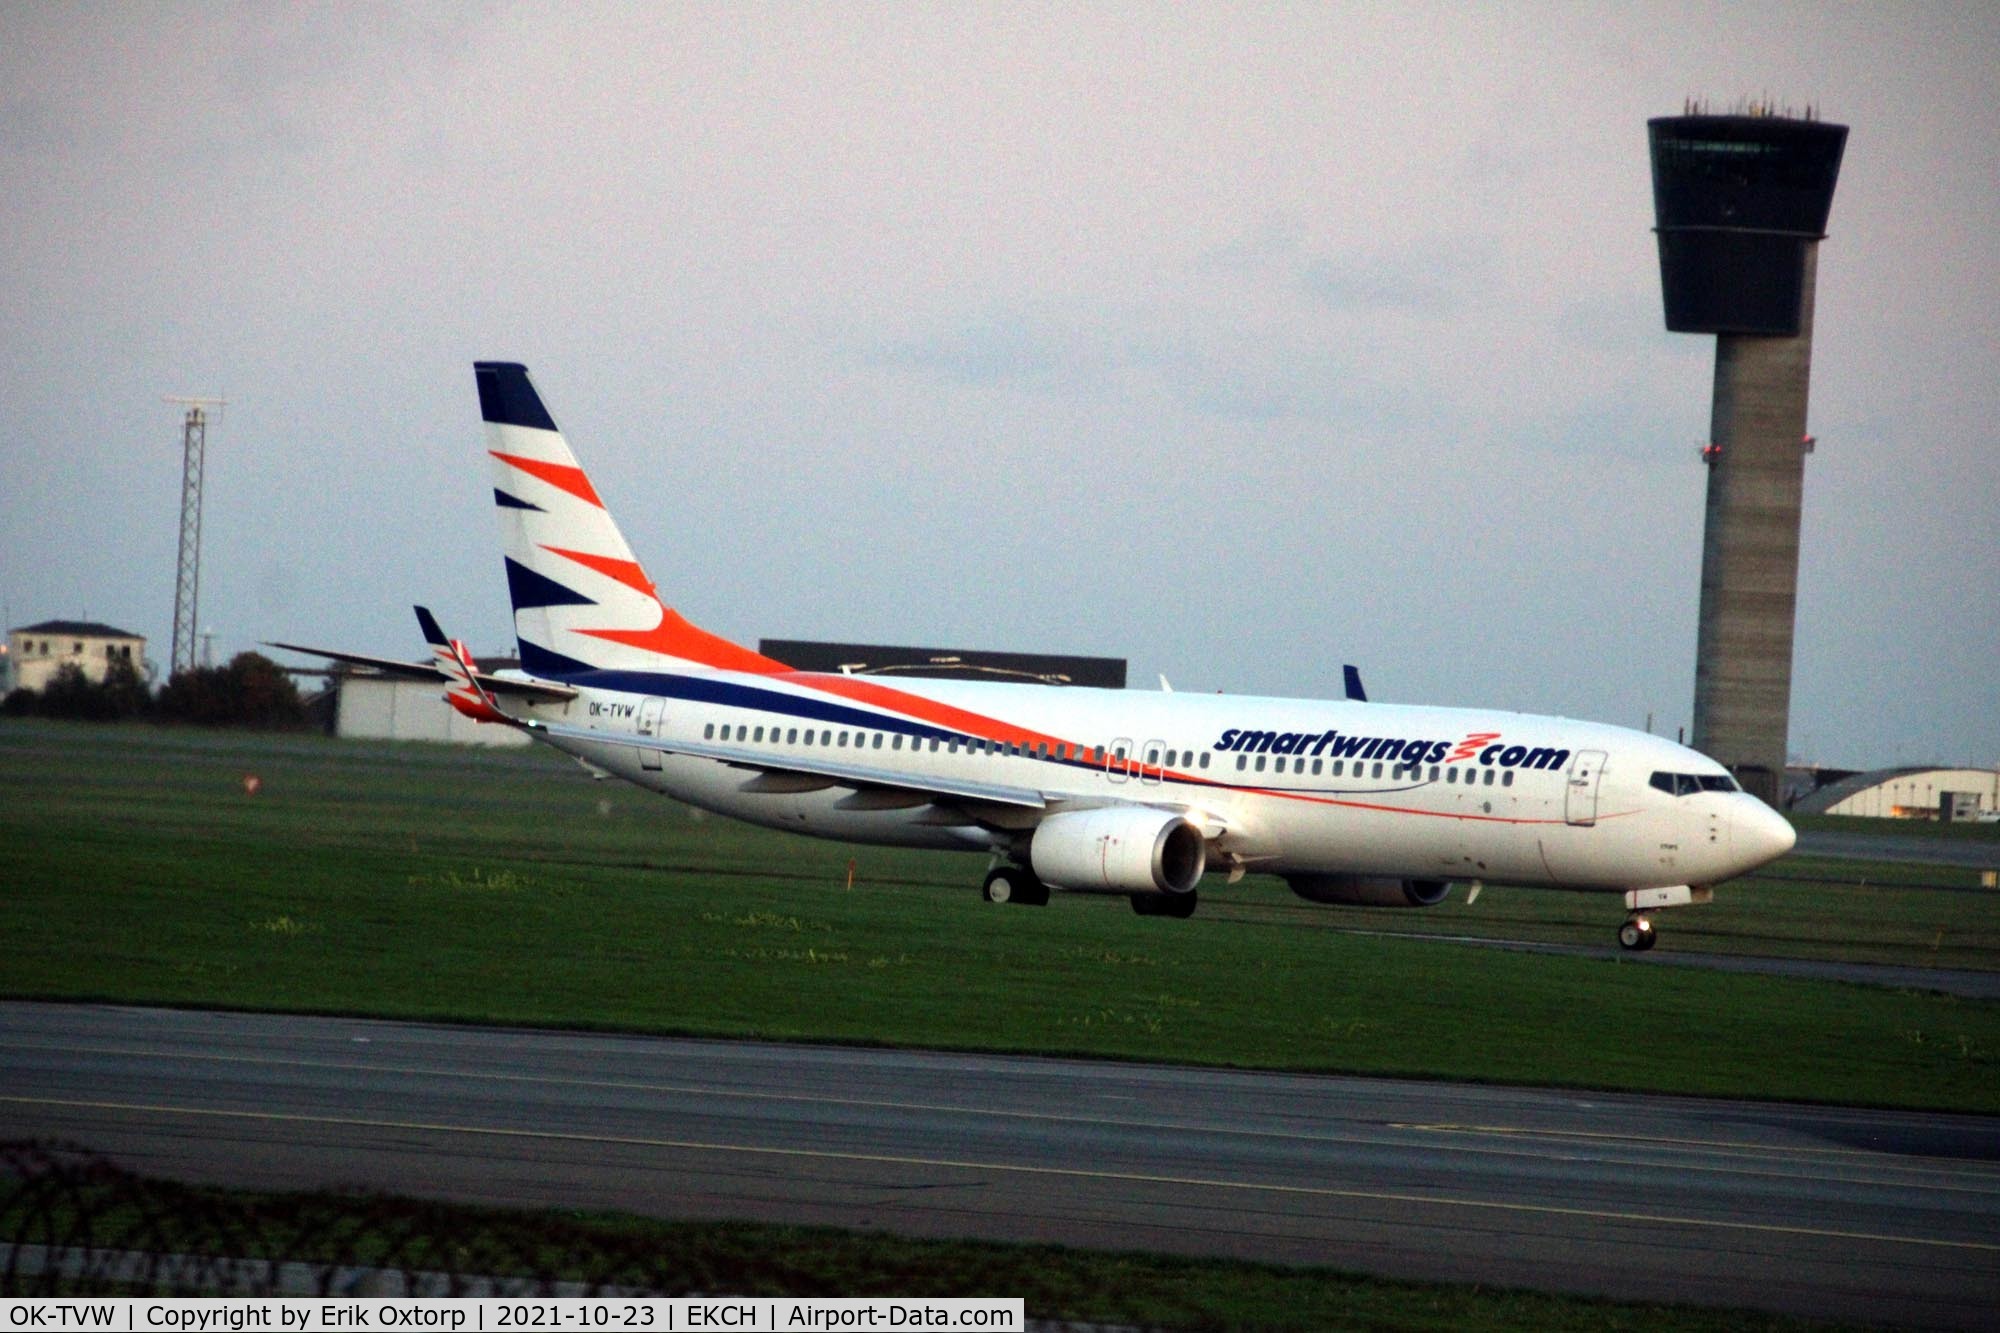 OK-TVW, 2004 Boeing 737-86Q C/N 30295, OK-TVW taking off rw 22R